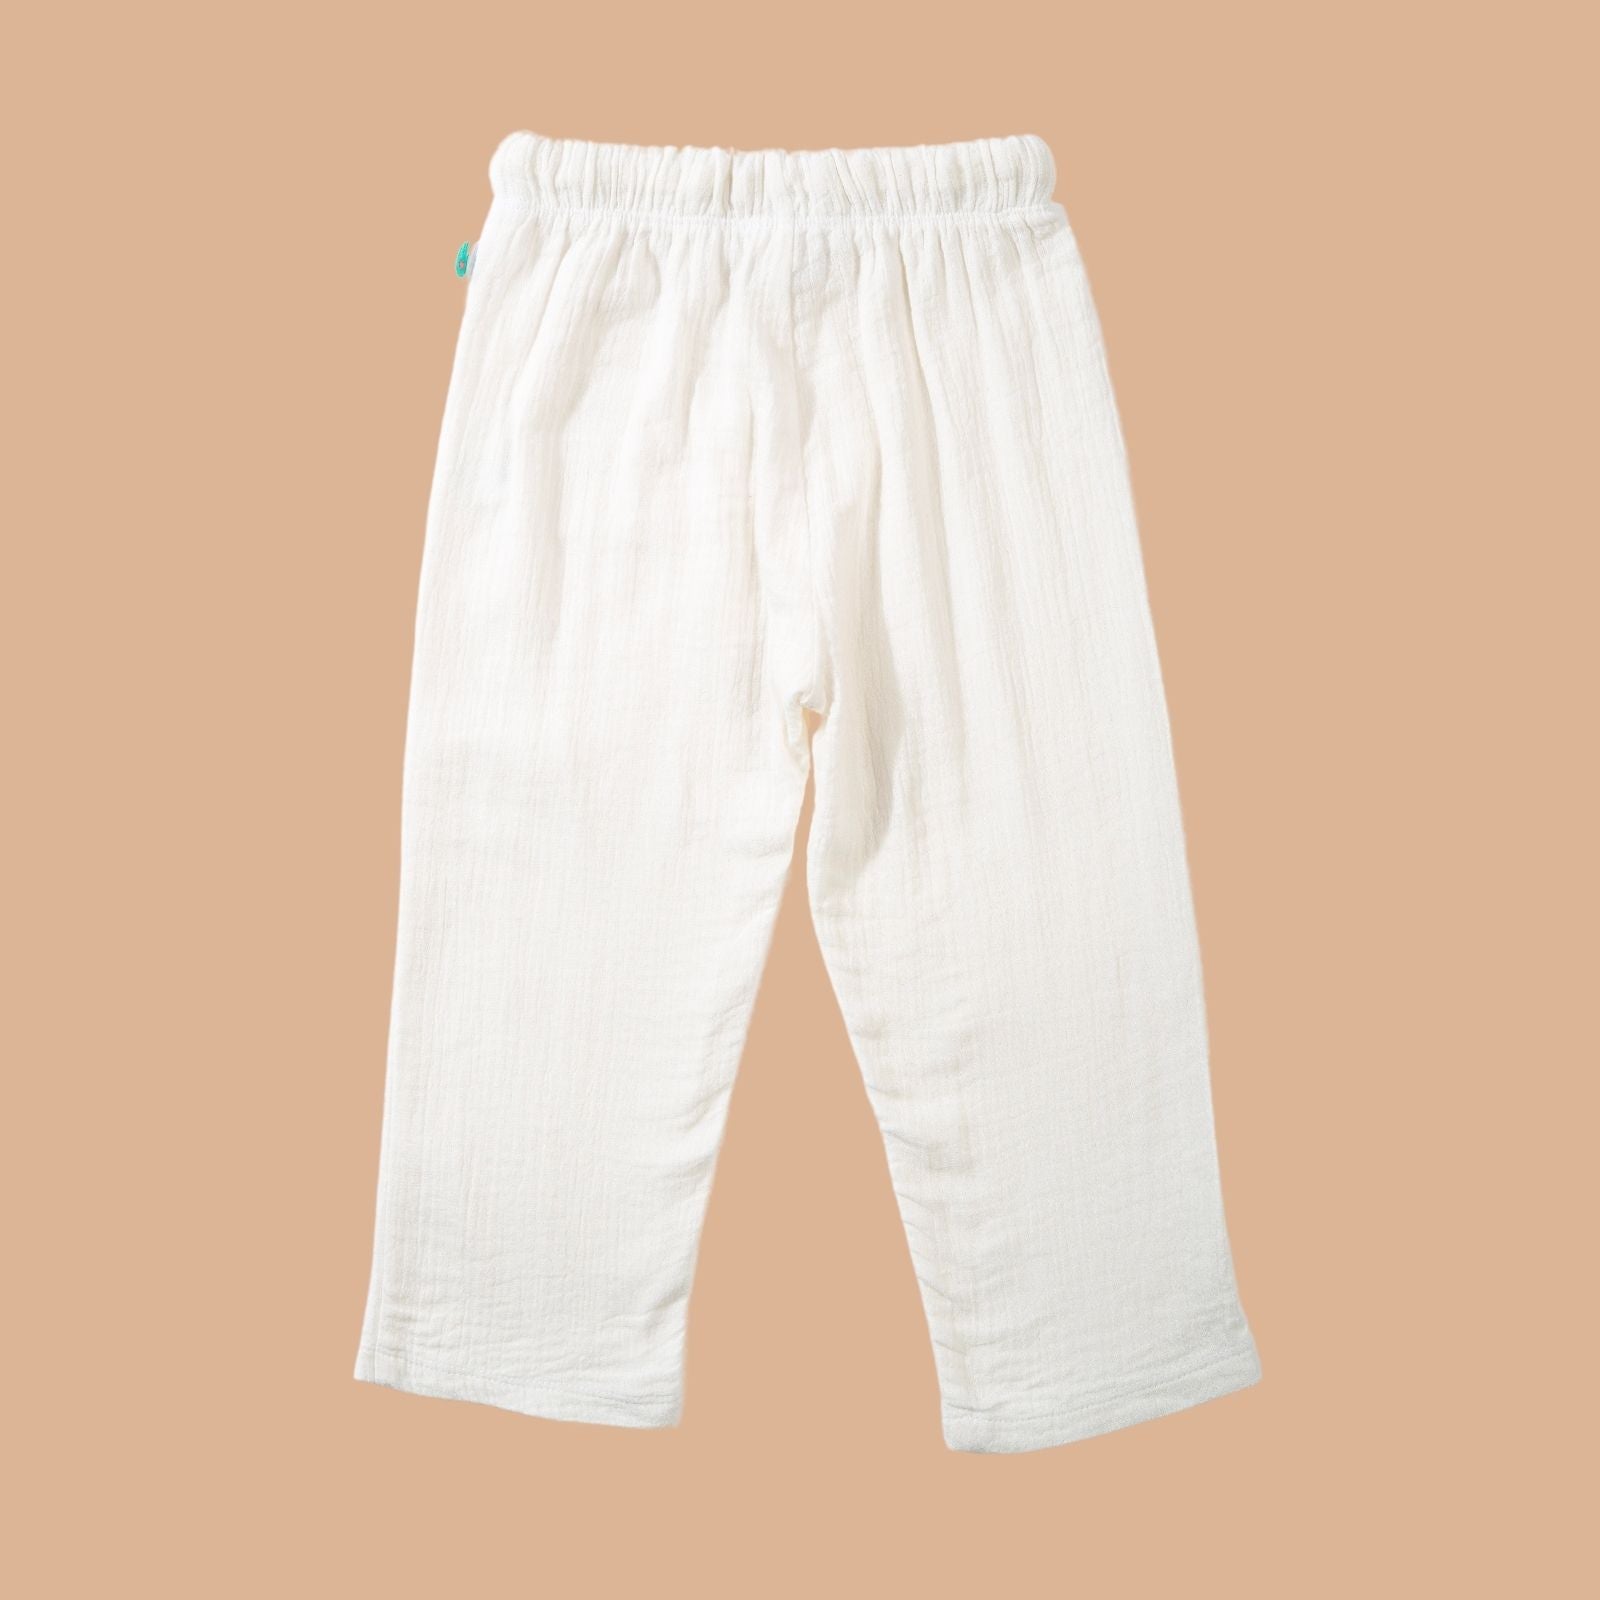 Greendeer White Shirt Cotton Cord Set